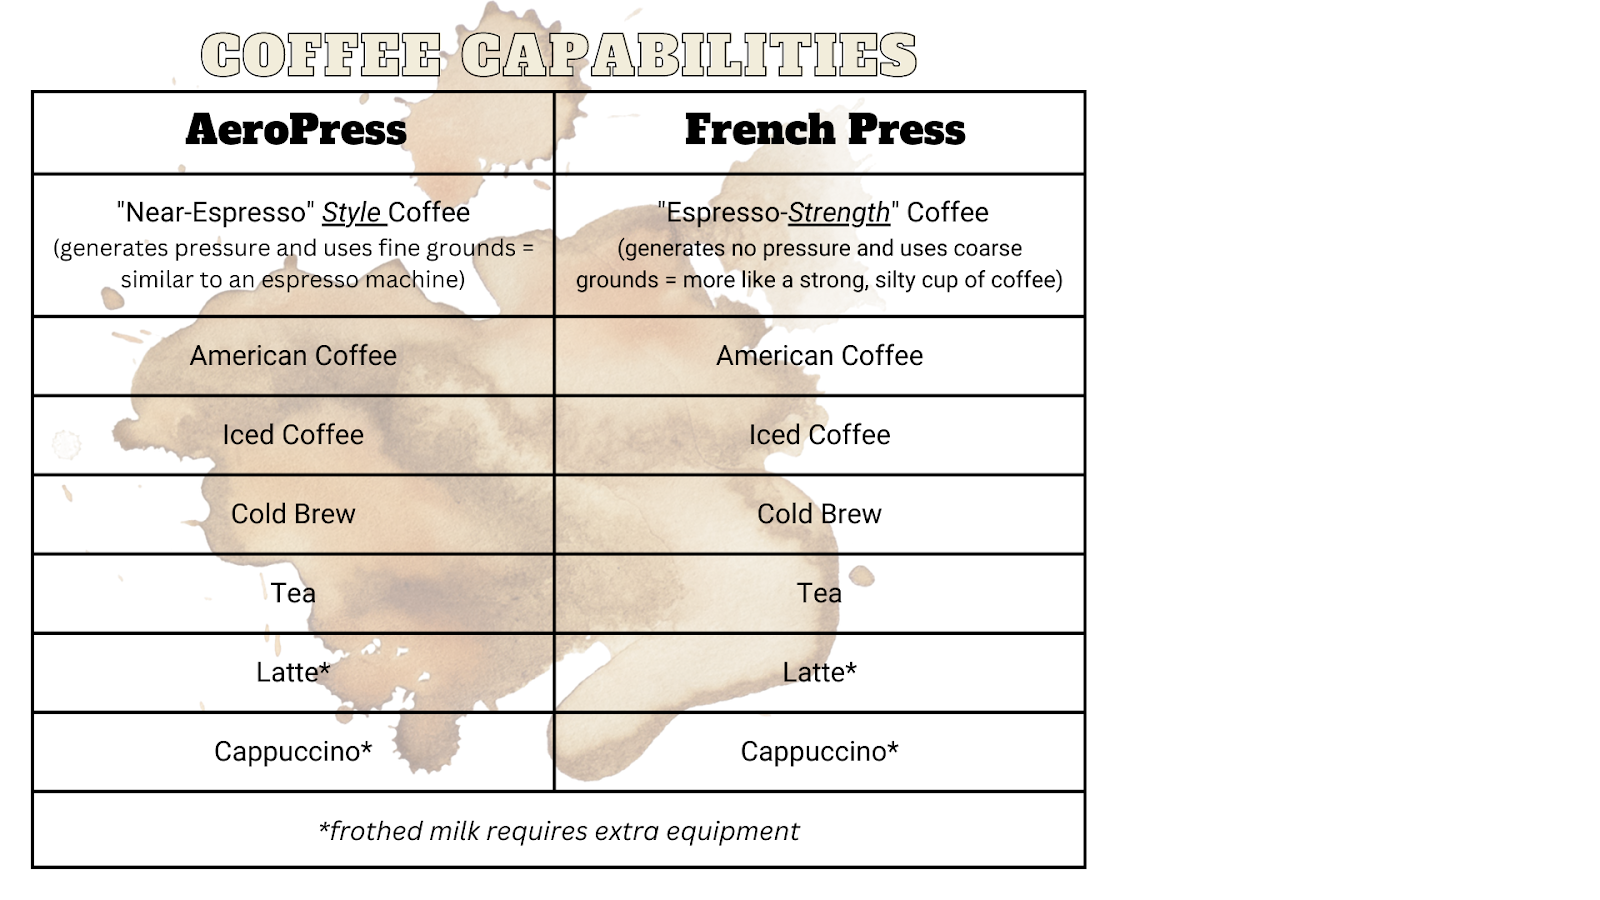 french-press-vs-aeropress-coffee-capabilities-table